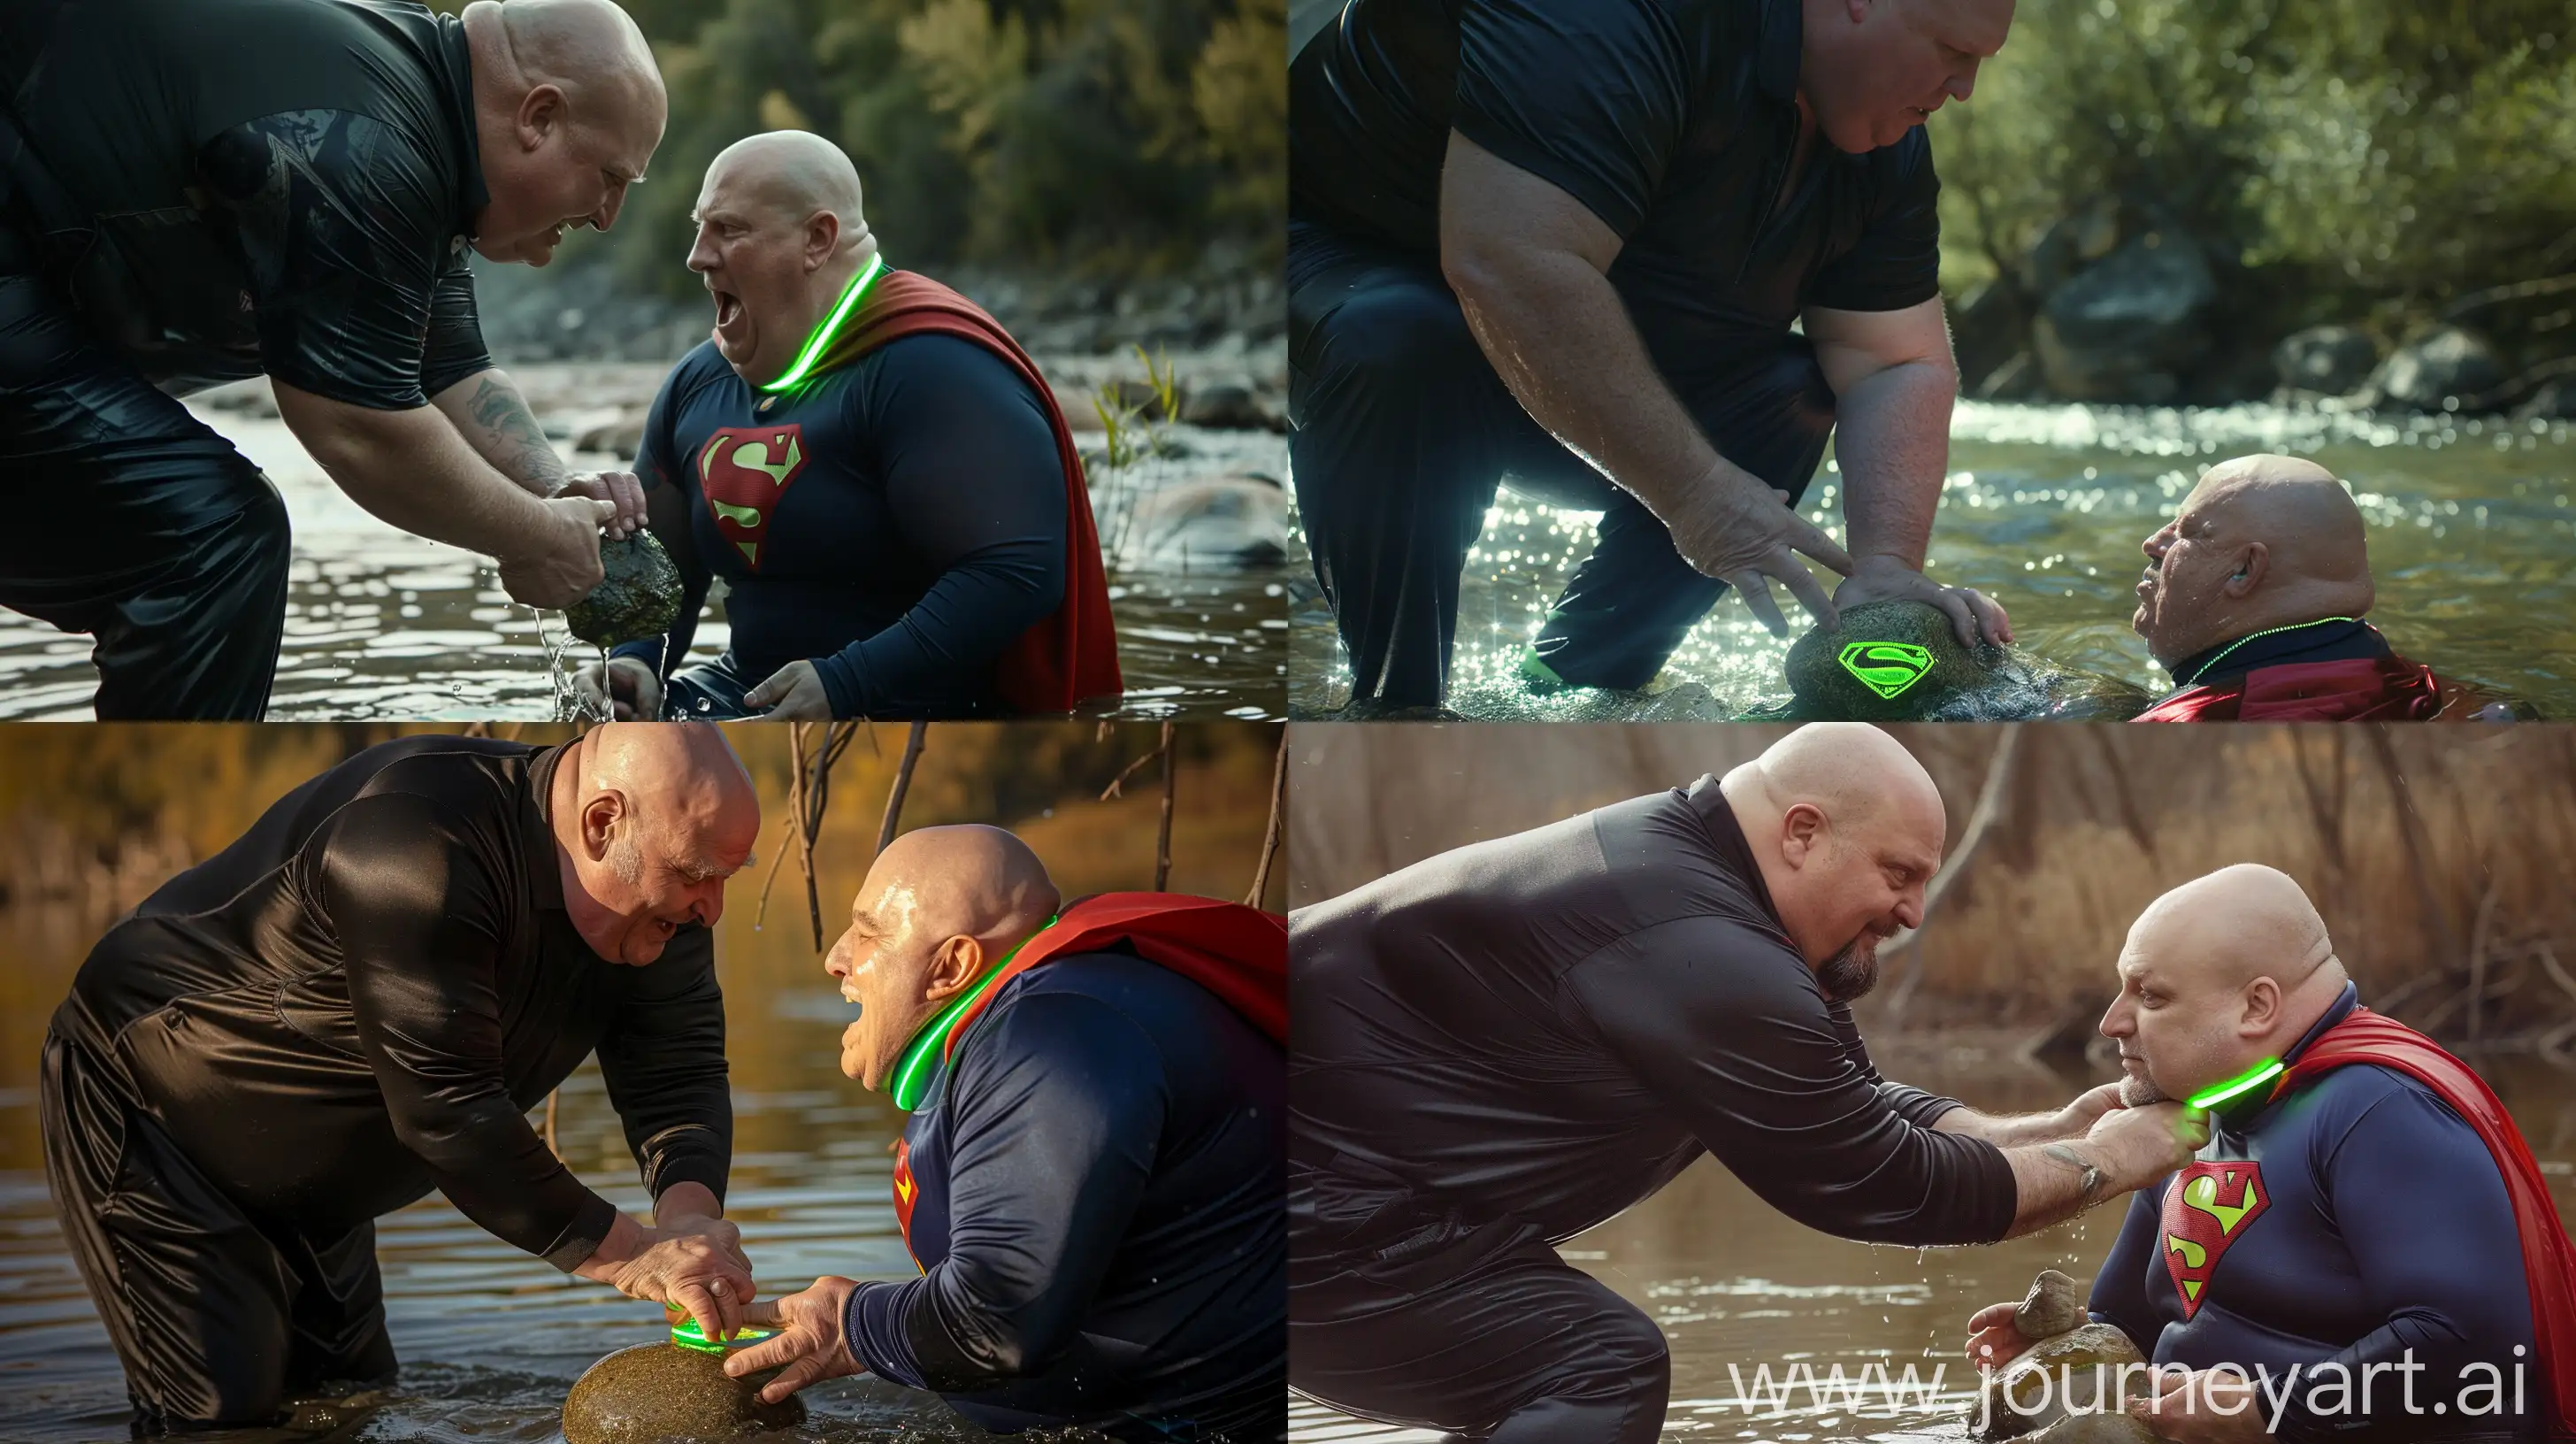 Senior-Superhero-Feeding-Green-Glow-Rock-to-WaterSitting-Companion